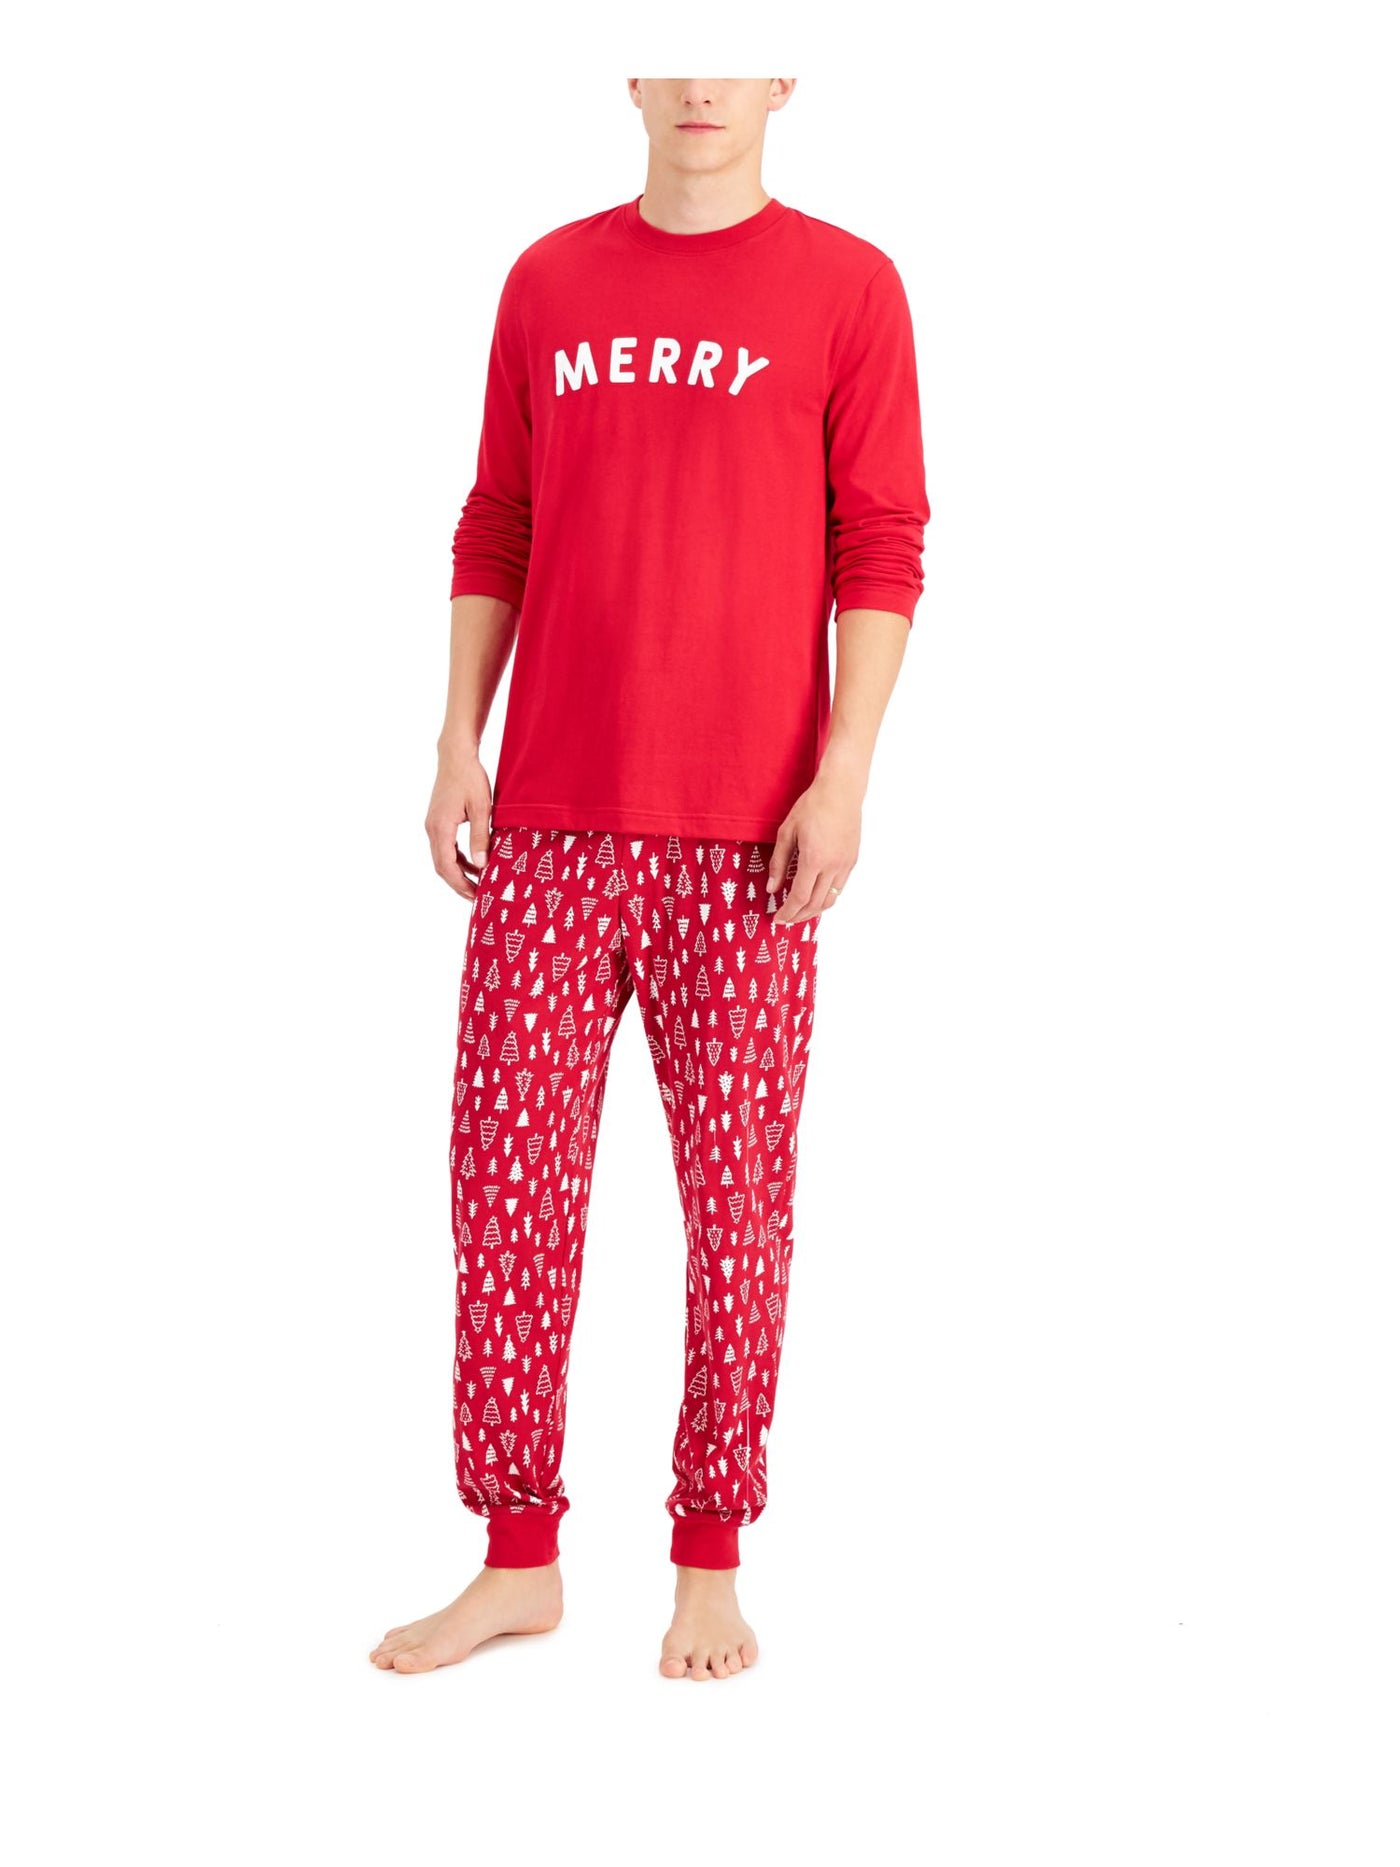 FAMILY PJs Mens Red Printed Elastic Band T-Shirt Top Cuffed Pants Pajamas M